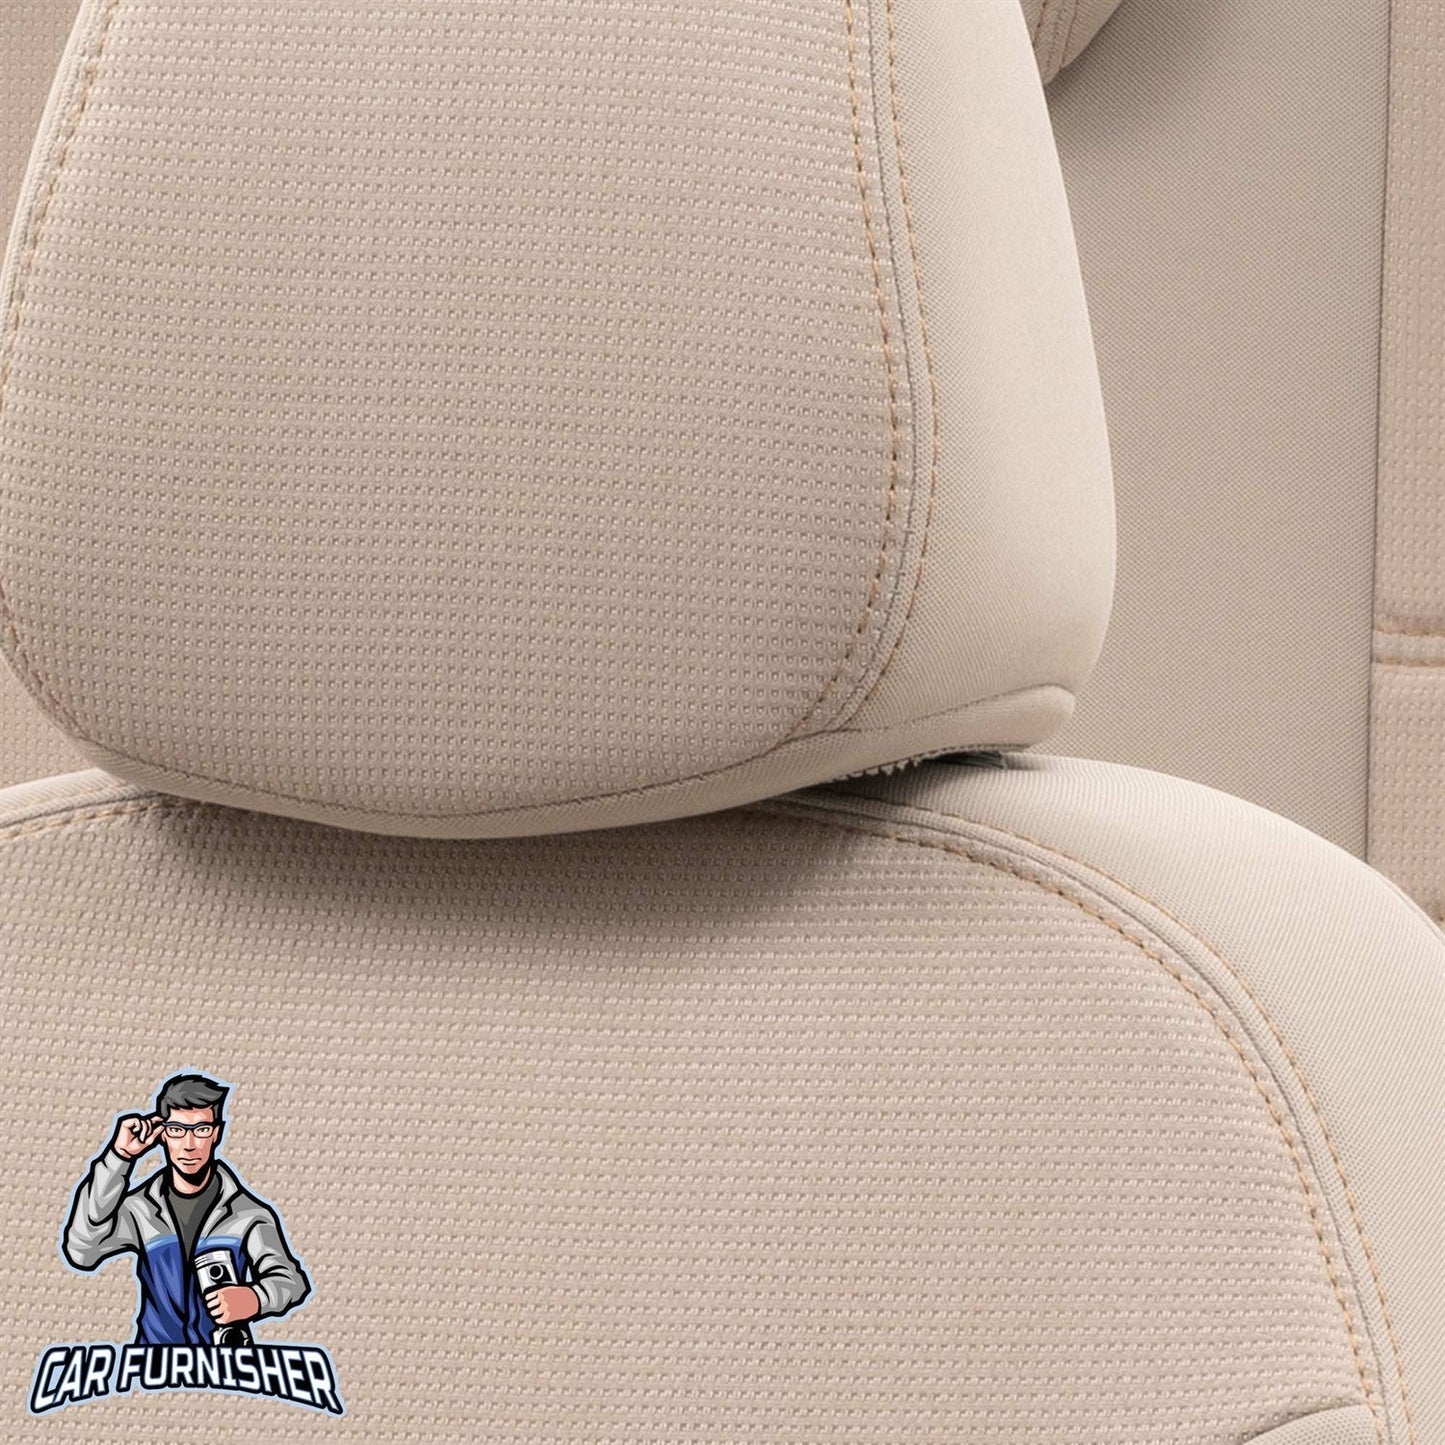 Volvo FH Seat Cover Original Jacquard Design Beige Jacquard Fabric